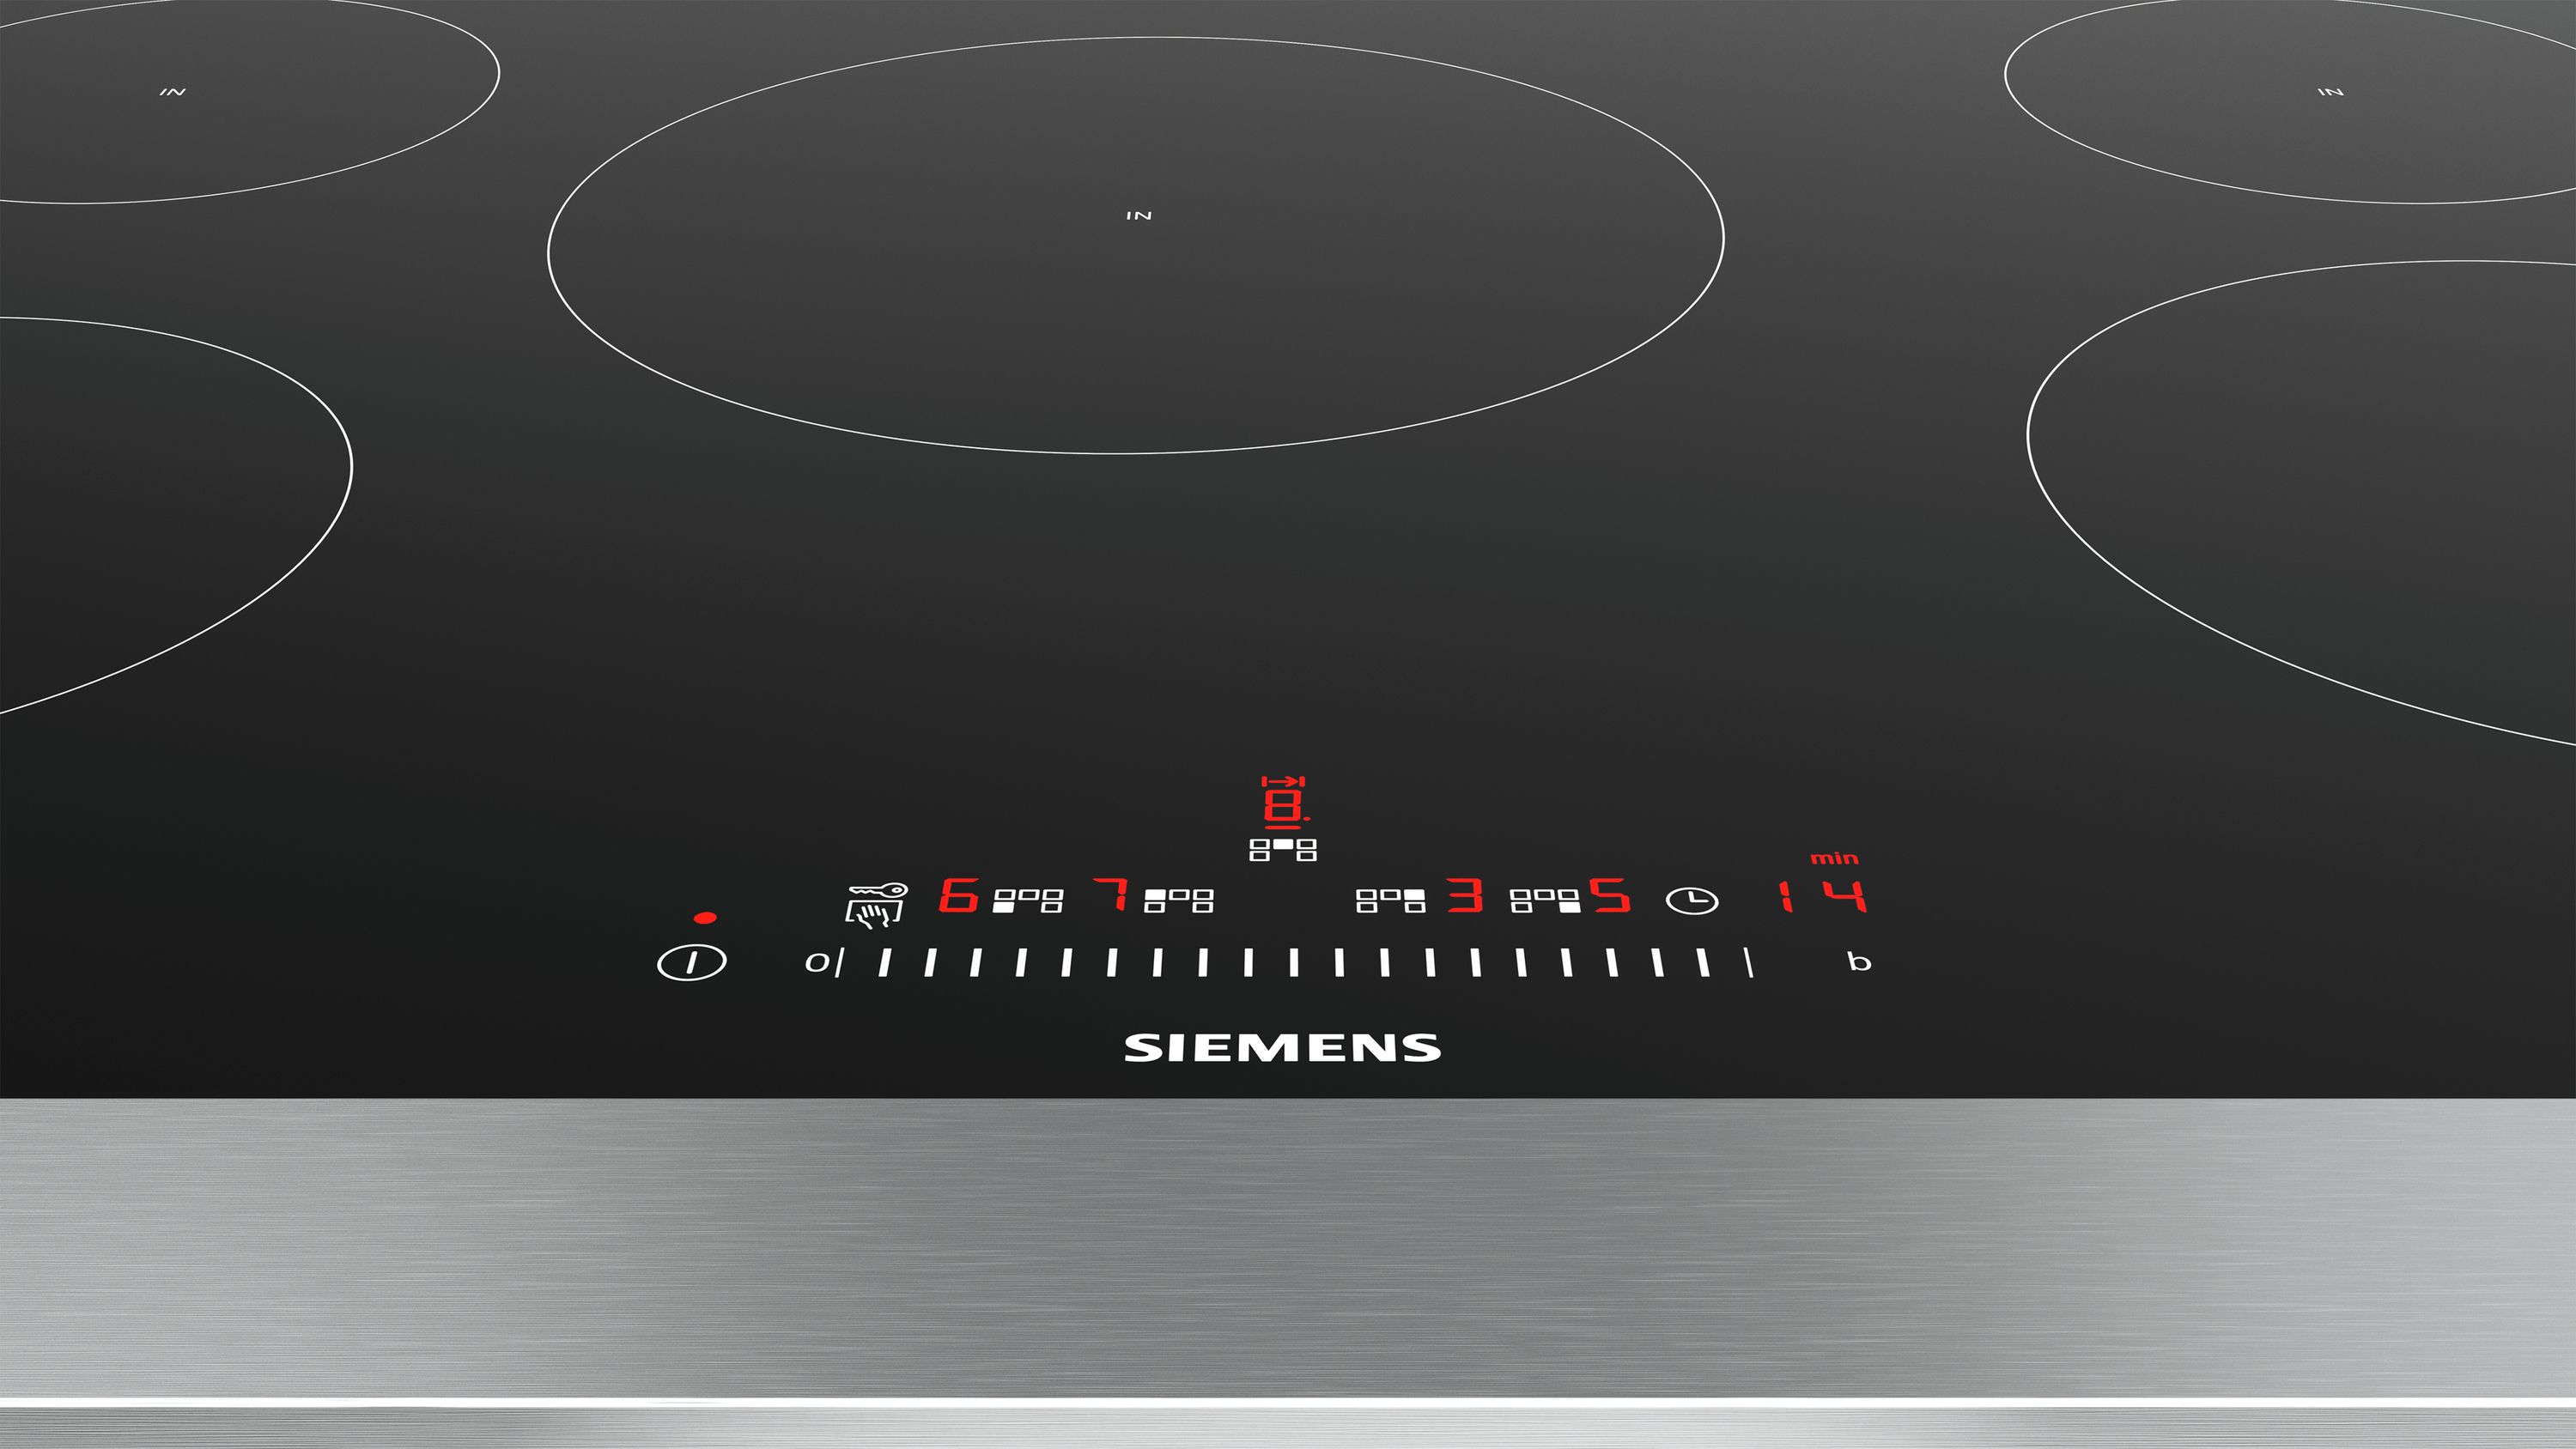 Technomarkt EH801FVB1E Siemens Induktions autarkes expert 5 Zone(n) 80cm iQ100 von Kochfeld/Herdplatte